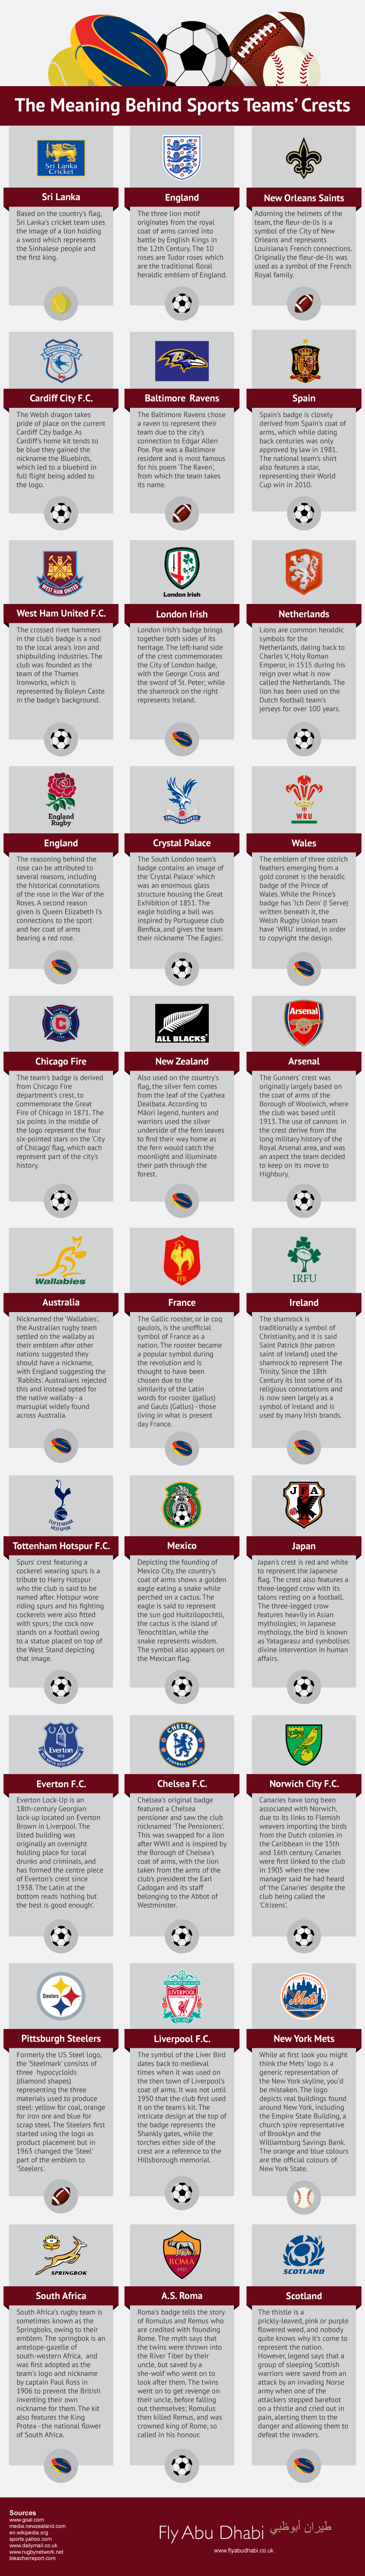 histoire des logos clubs football